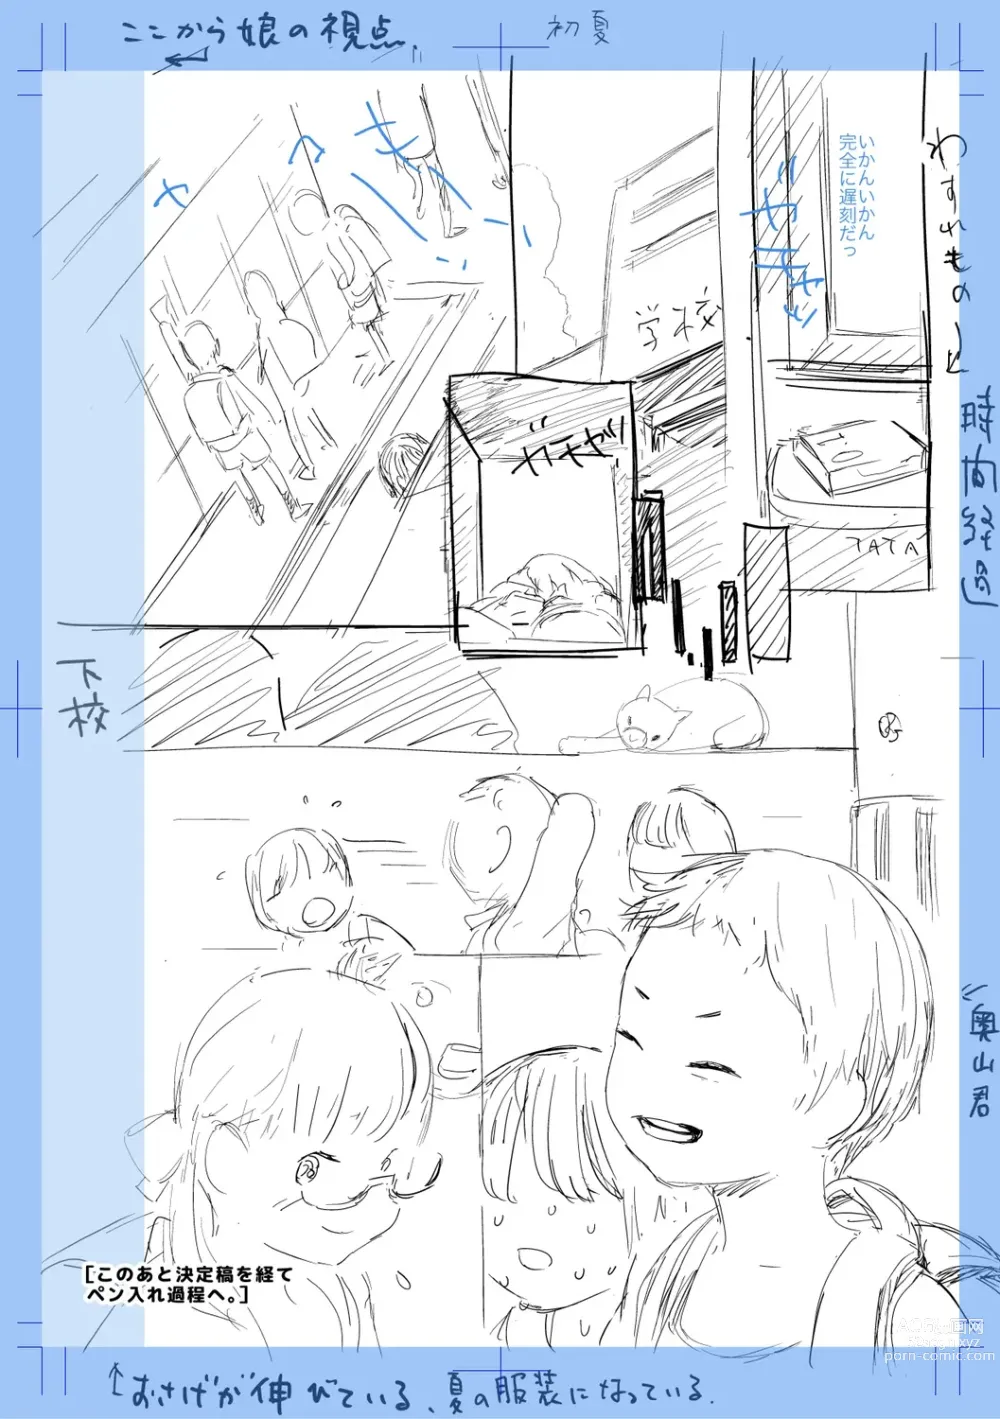 Page 240 of manga Hitoketakko Adorable